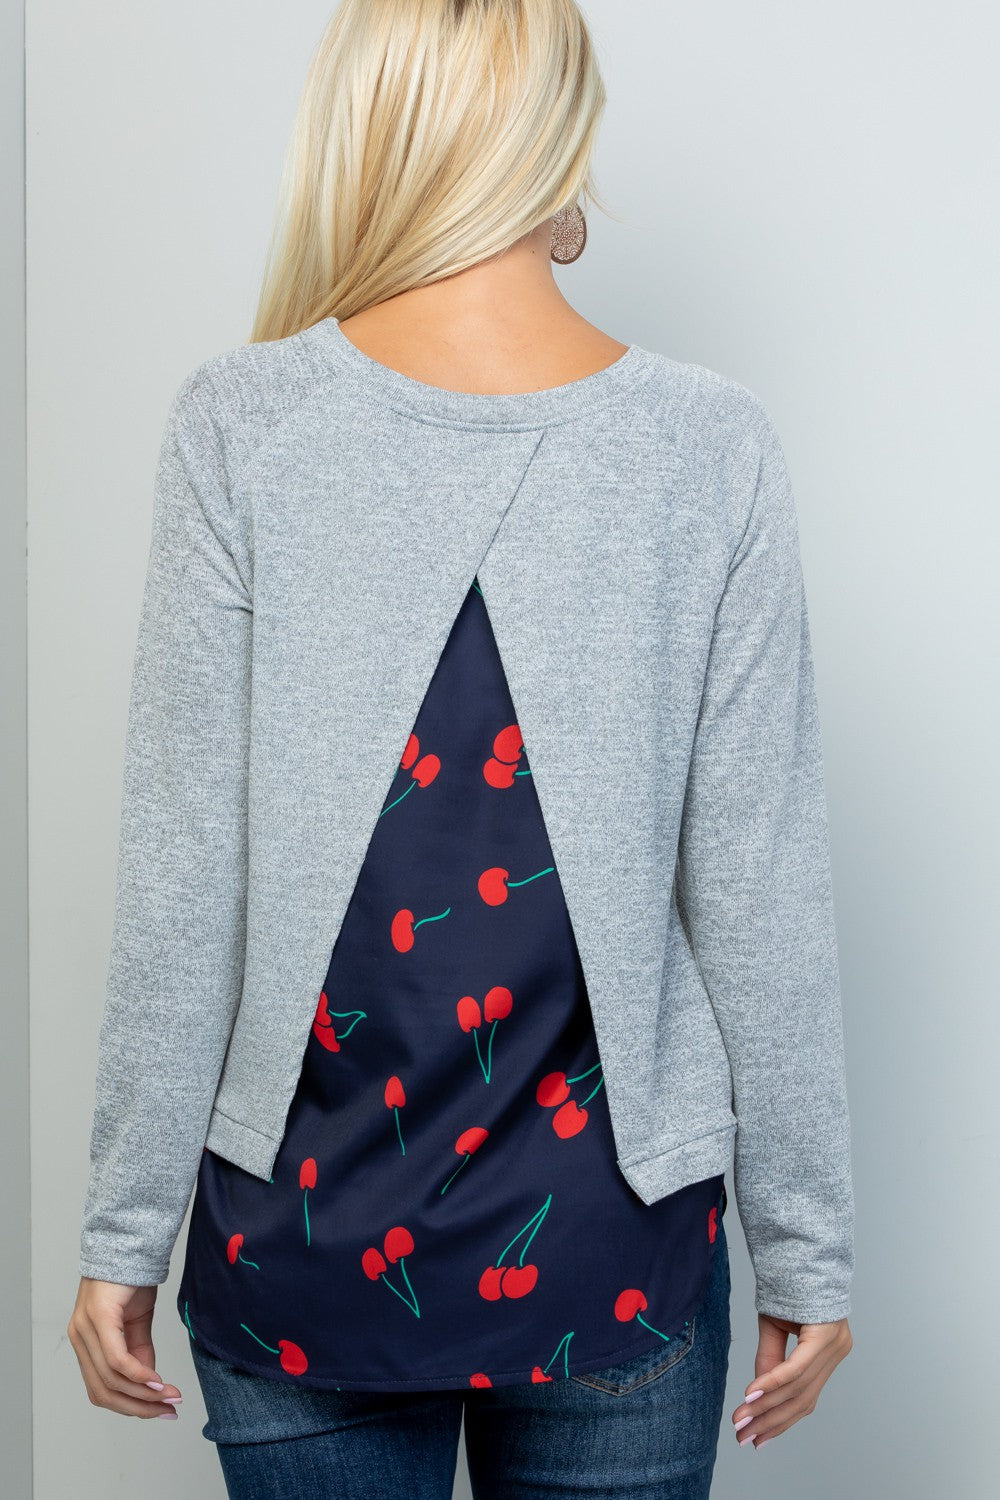 Cherry Print Sweater Top